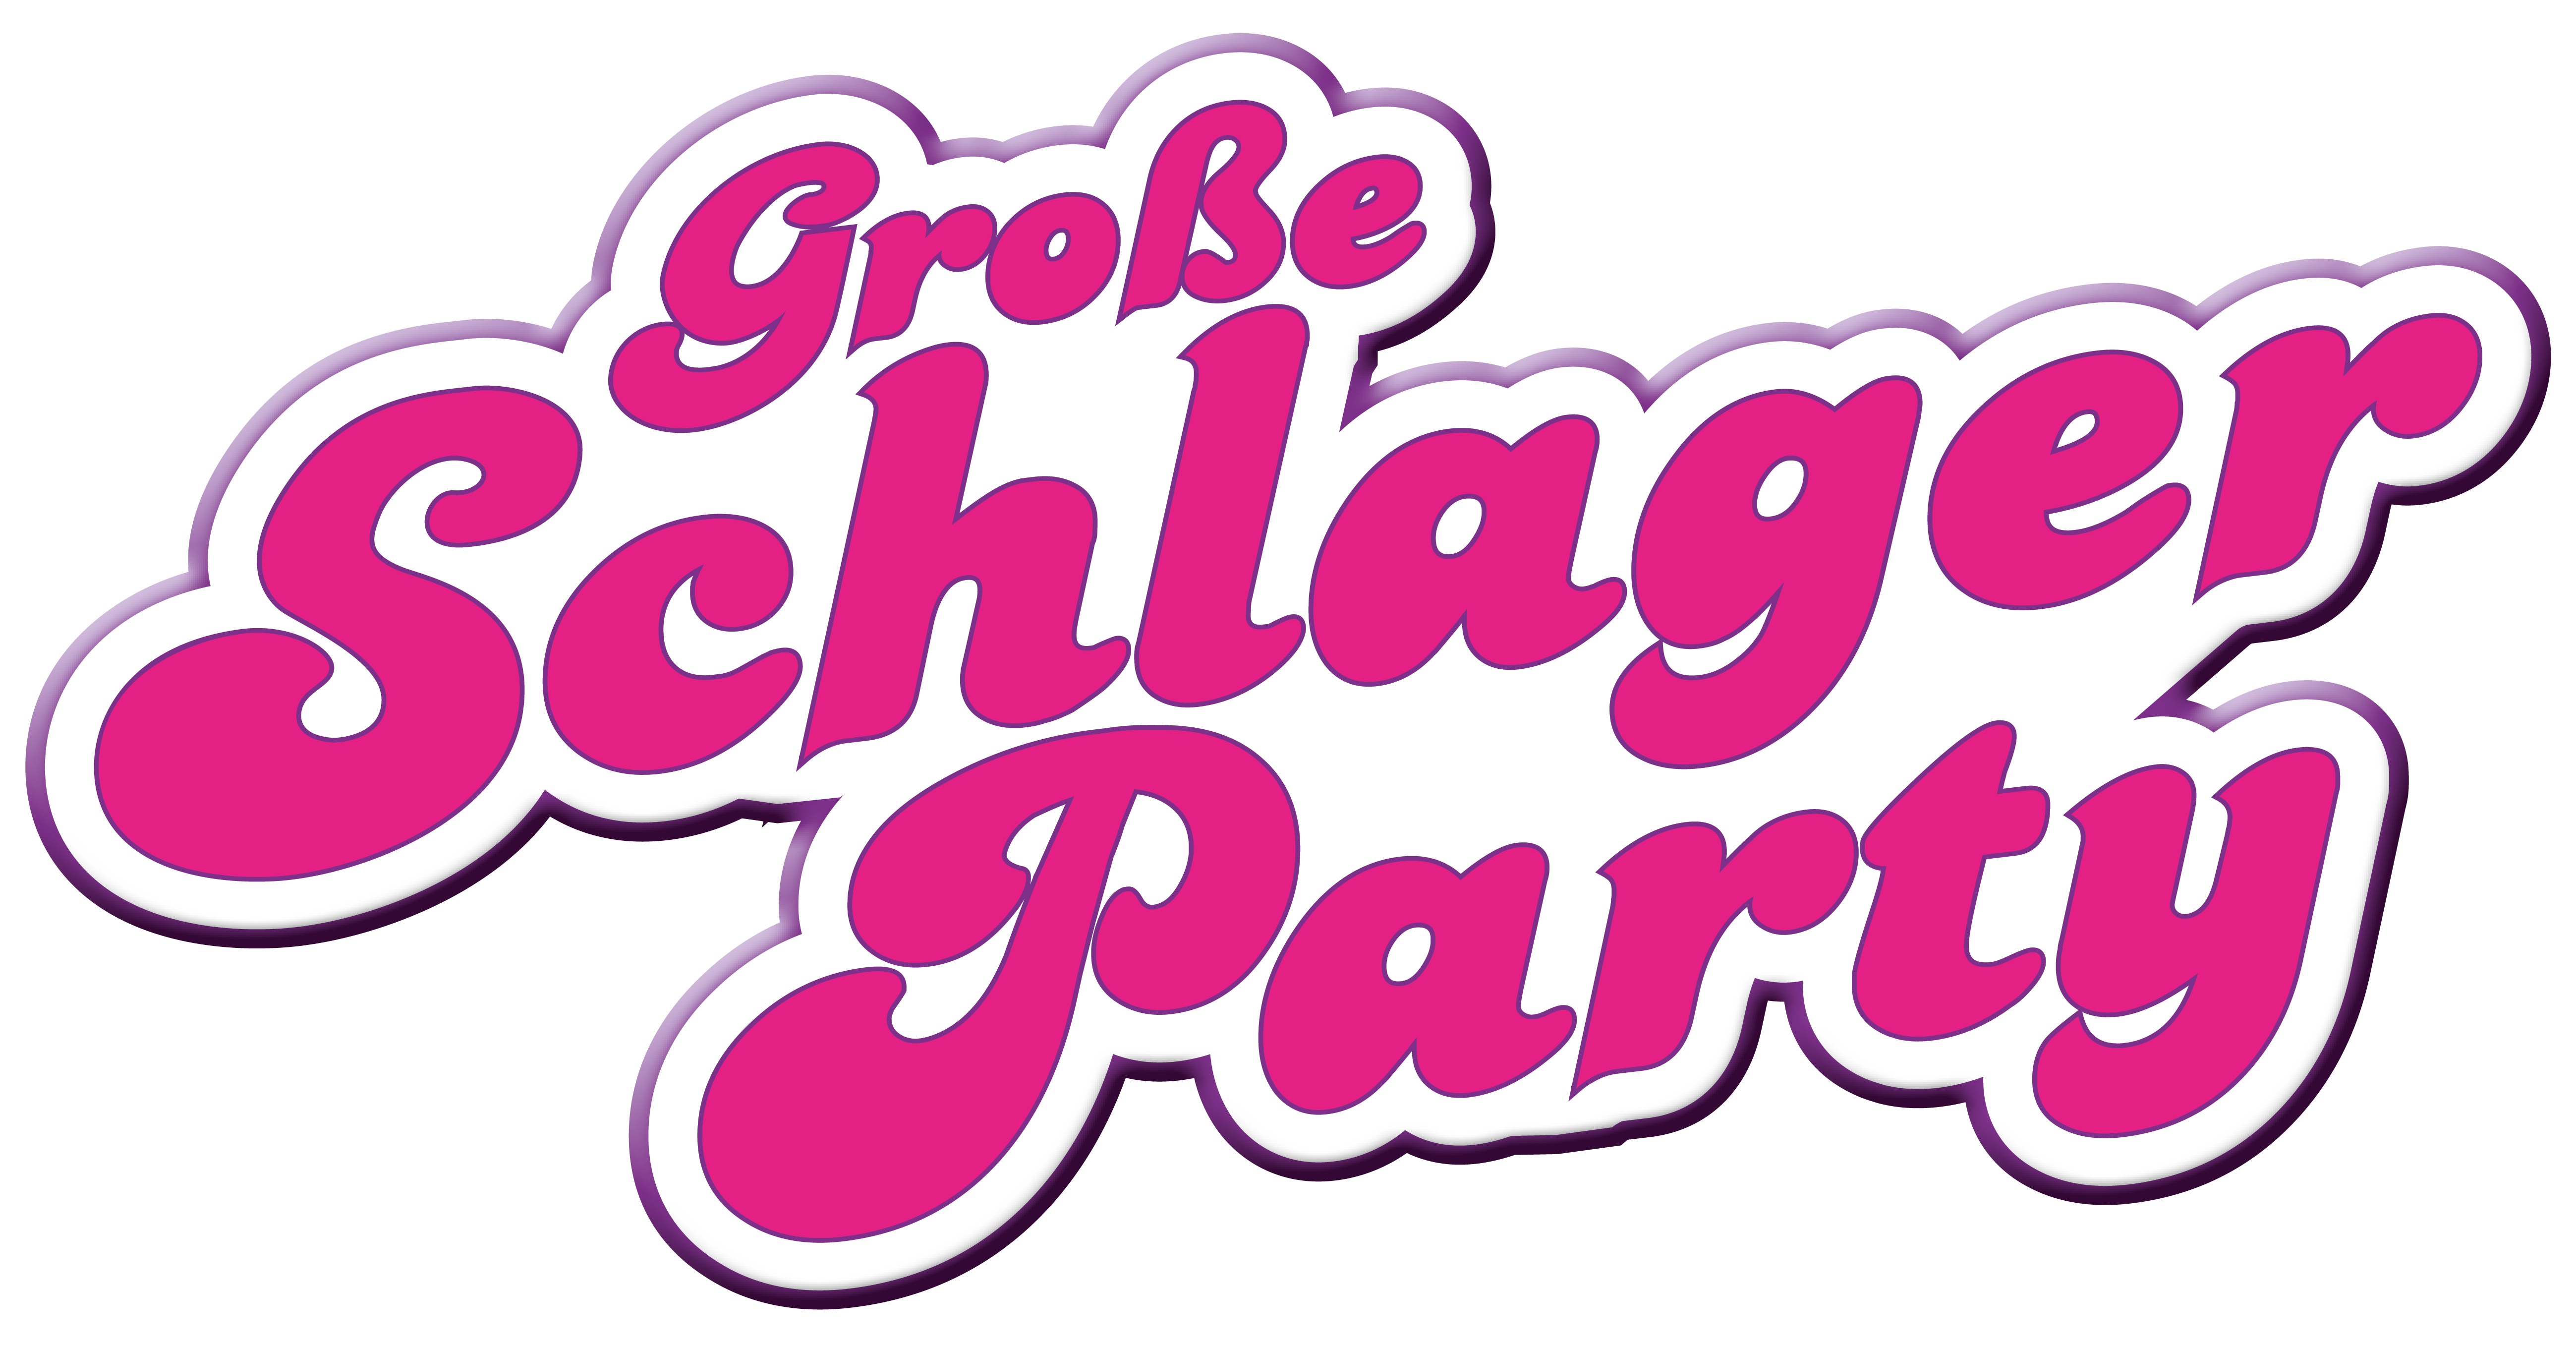 Gross Schlagerparty logo